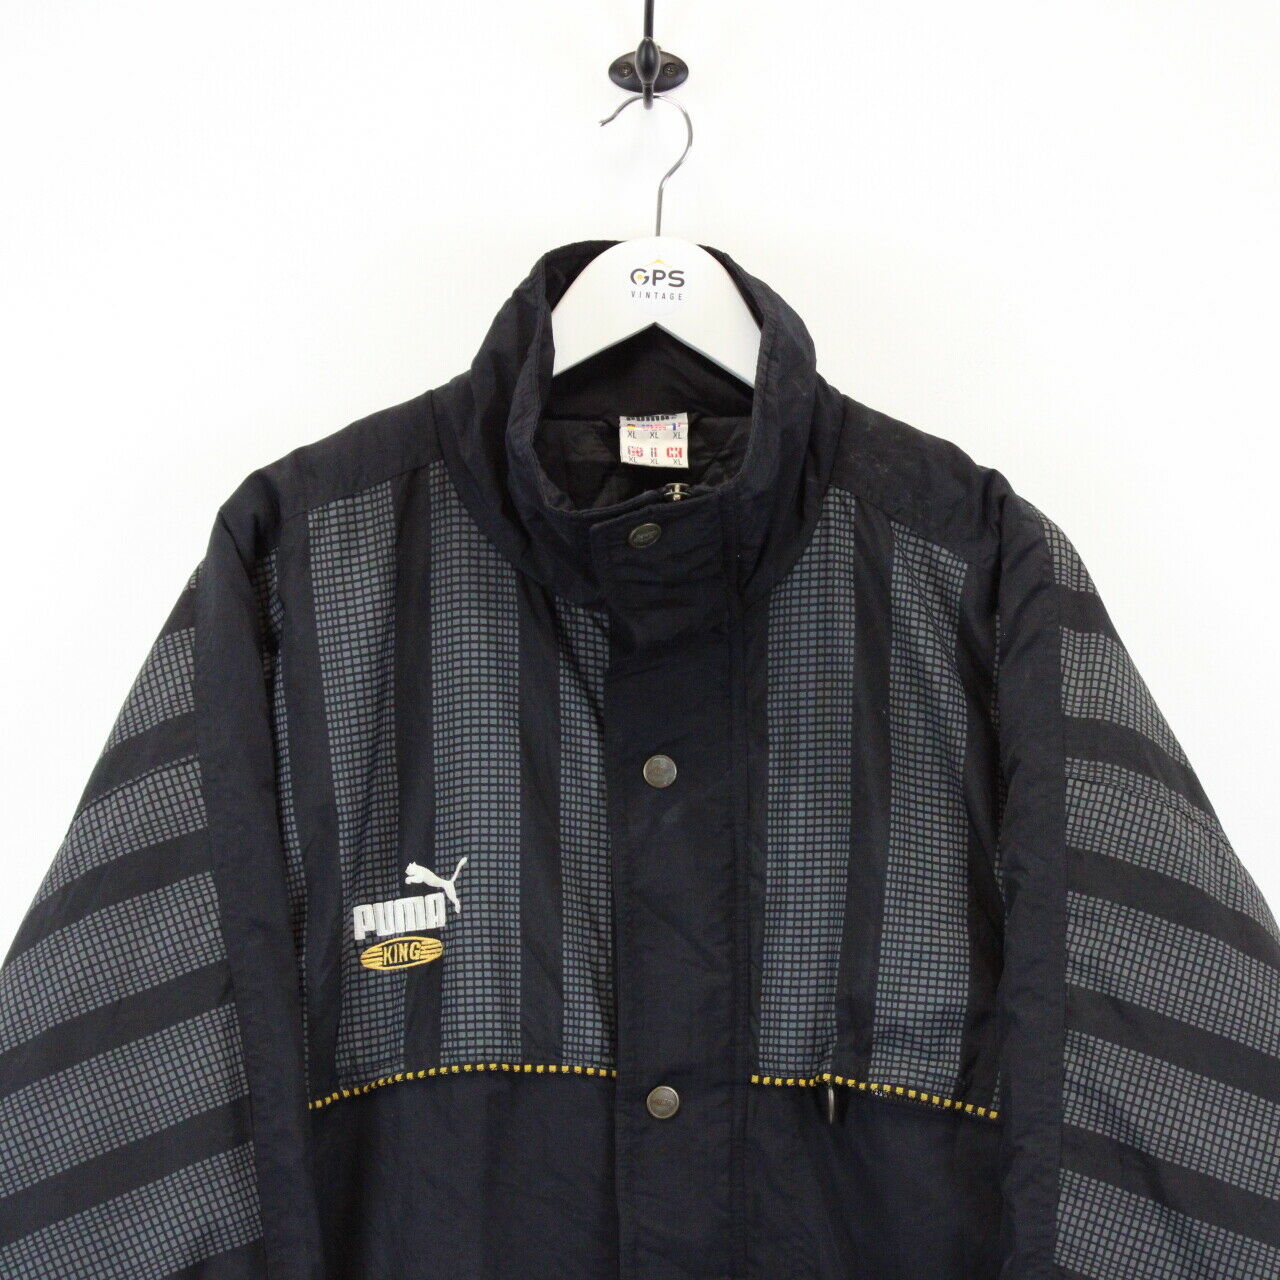 Vintage 90s PUMA KING Jacket Black | XL